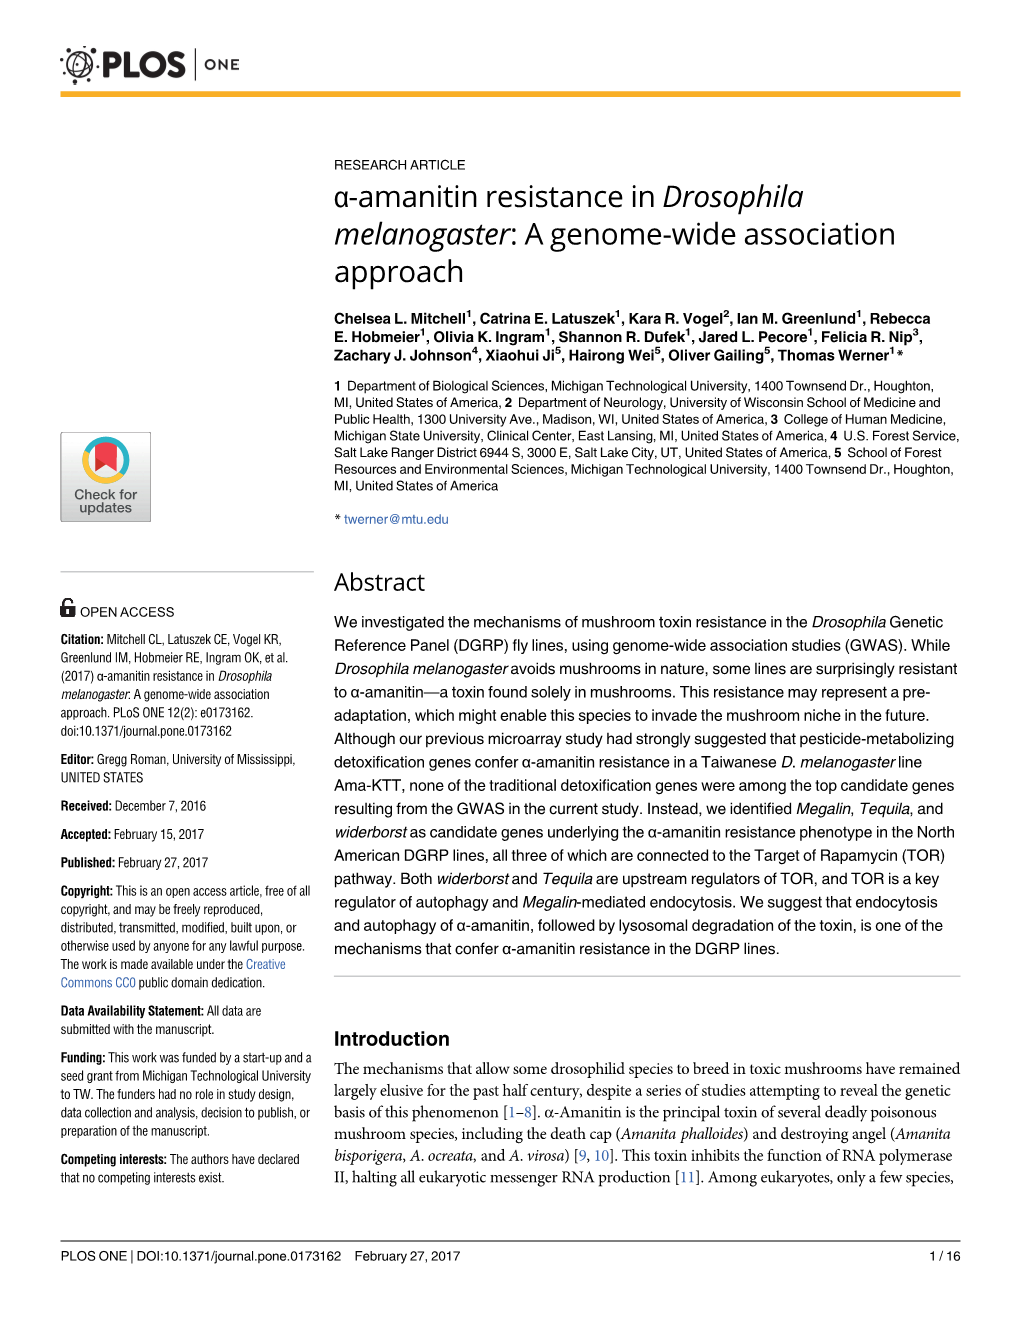 Amanitin Resistance in Drosophila Melanogaster: a Genome-Wide Association Approach